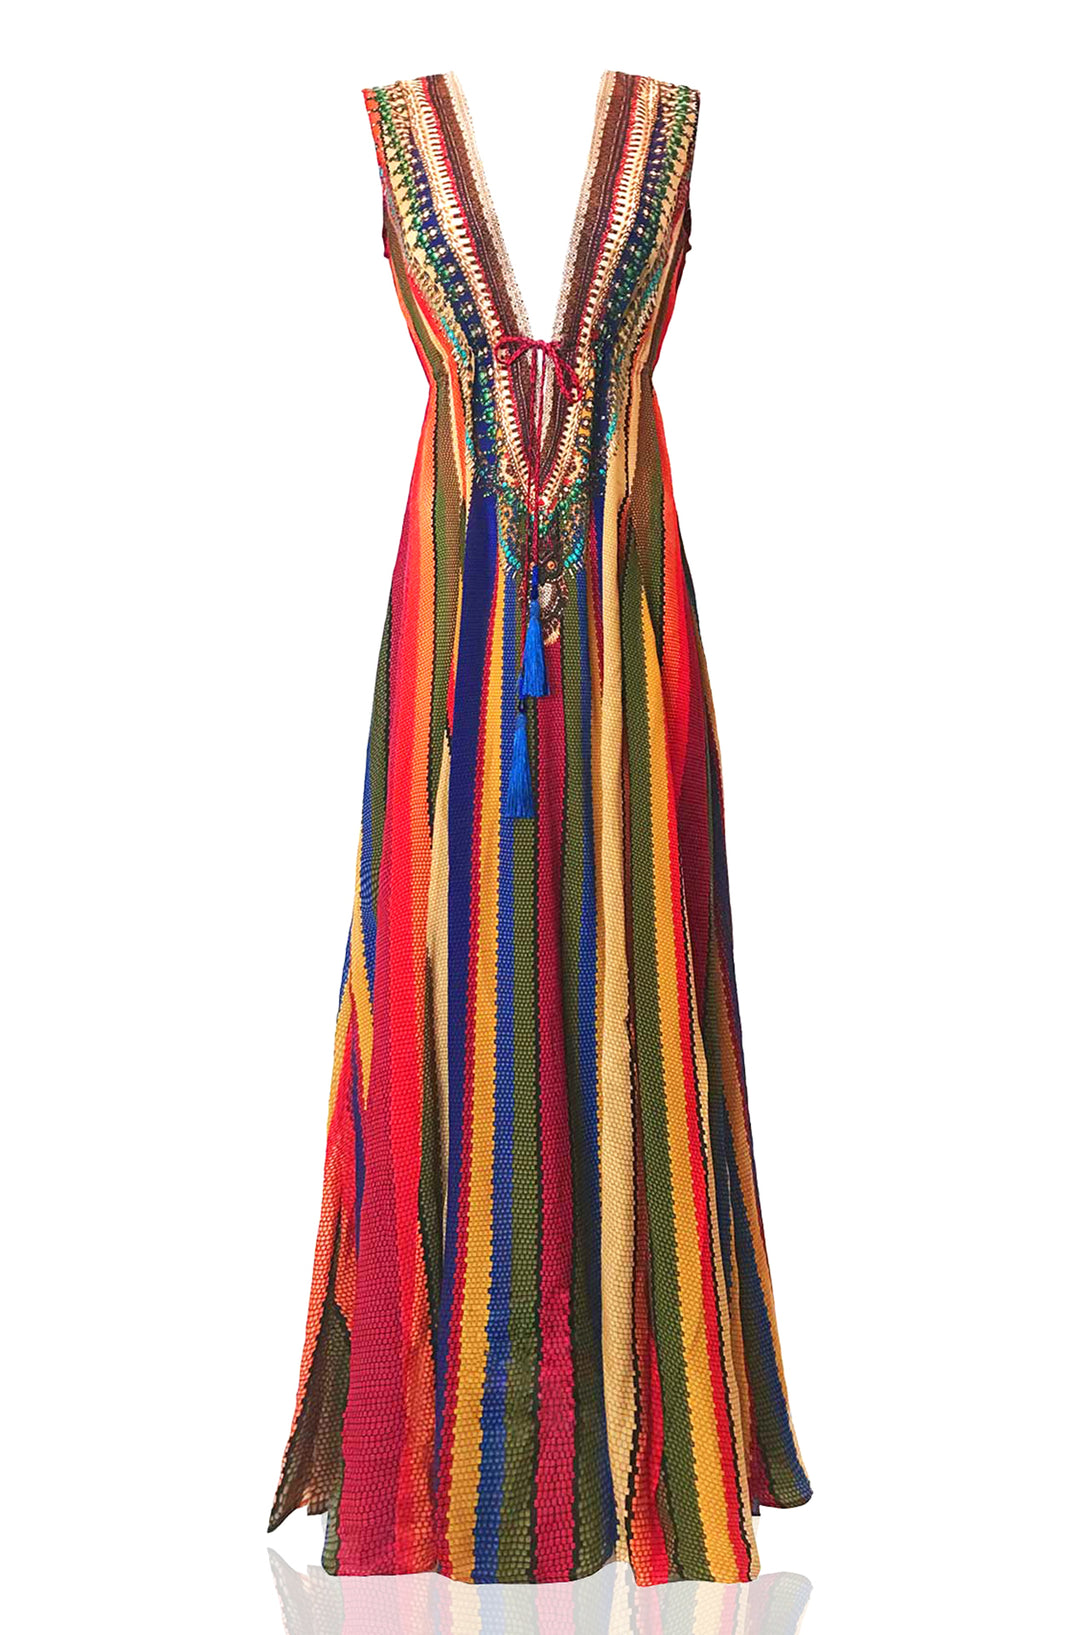  multi colored flowy dress, Shahida Parides, long dresses for women, flowy maxi dress, Shahida Parides,